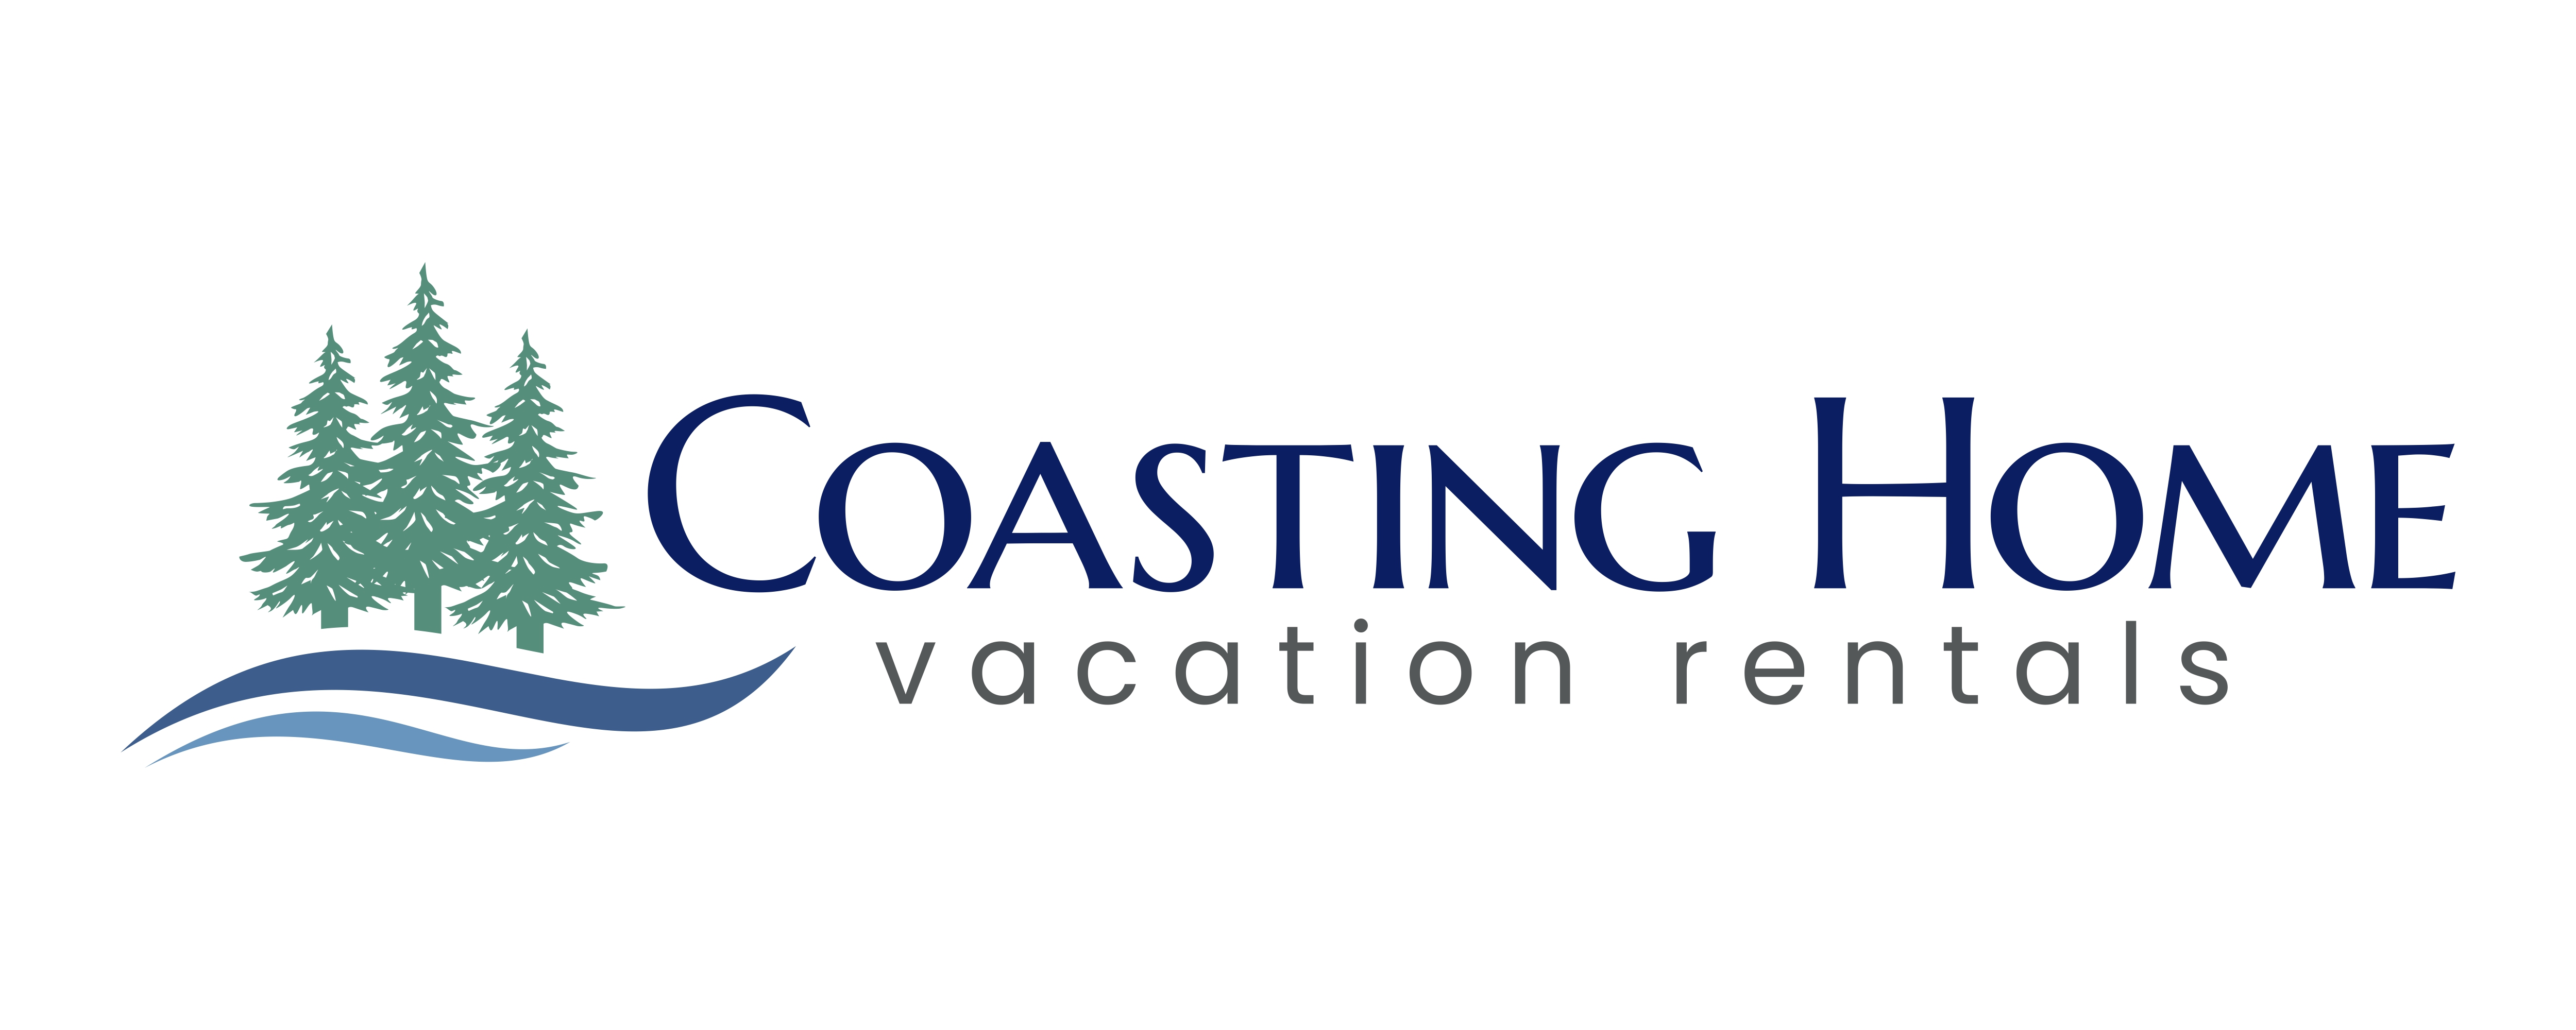 Coasting Home - The Sea Ranch and Gualala Vacation Rentals and Property Management along the Northern Coast of California!